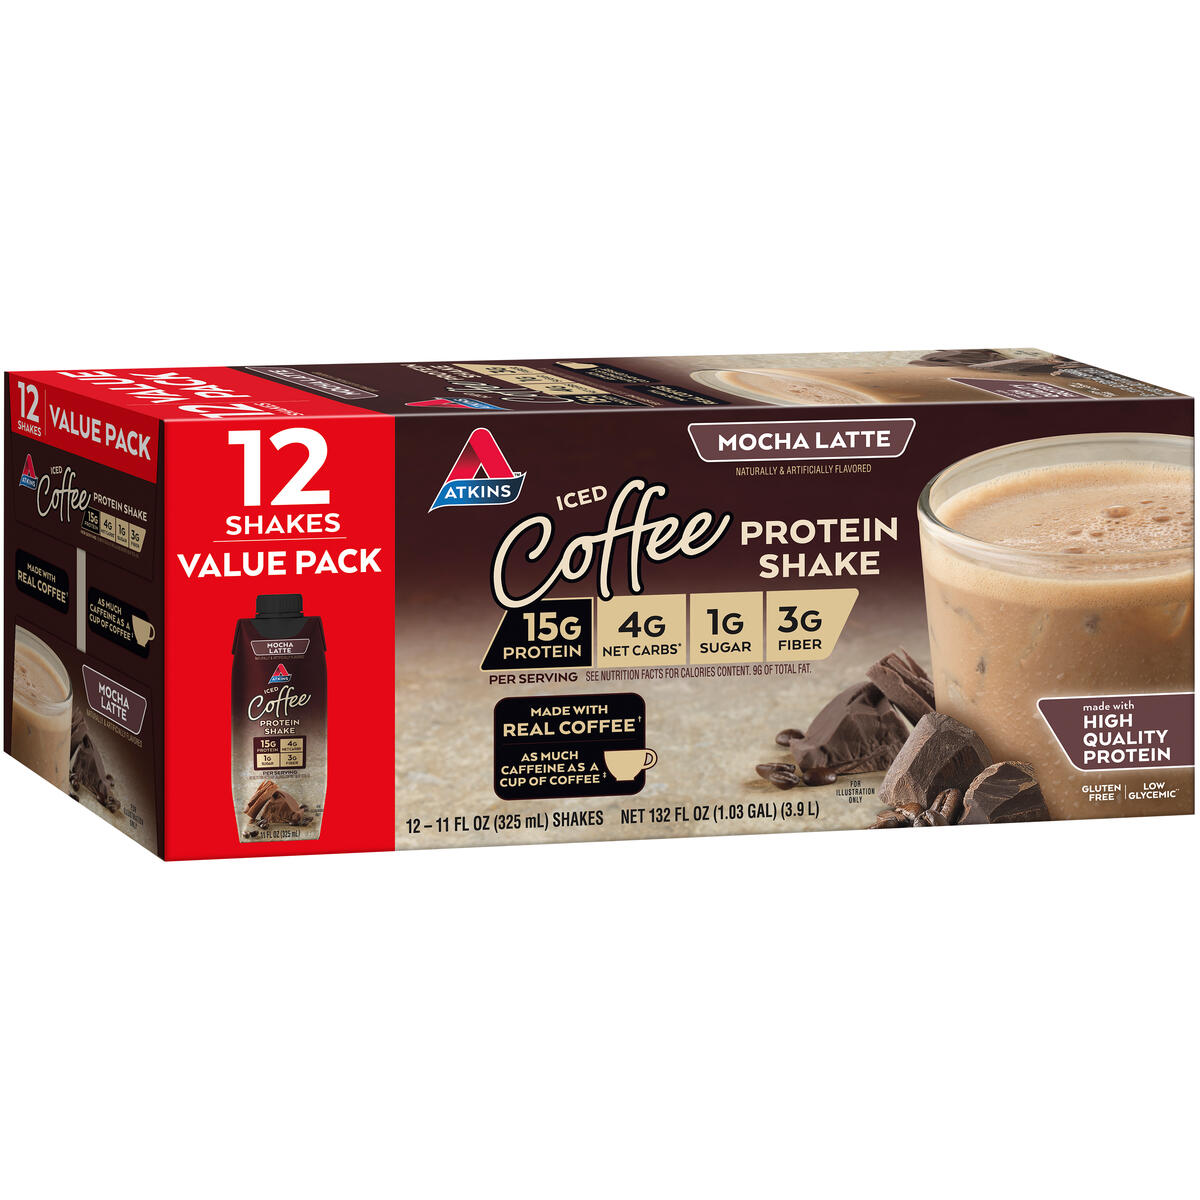 Atkins Mocha Latte Iced Coffee Protein Shake, Low Carb, Low Sugar, Keto Friendly, 12 Ct - image 2 of 9